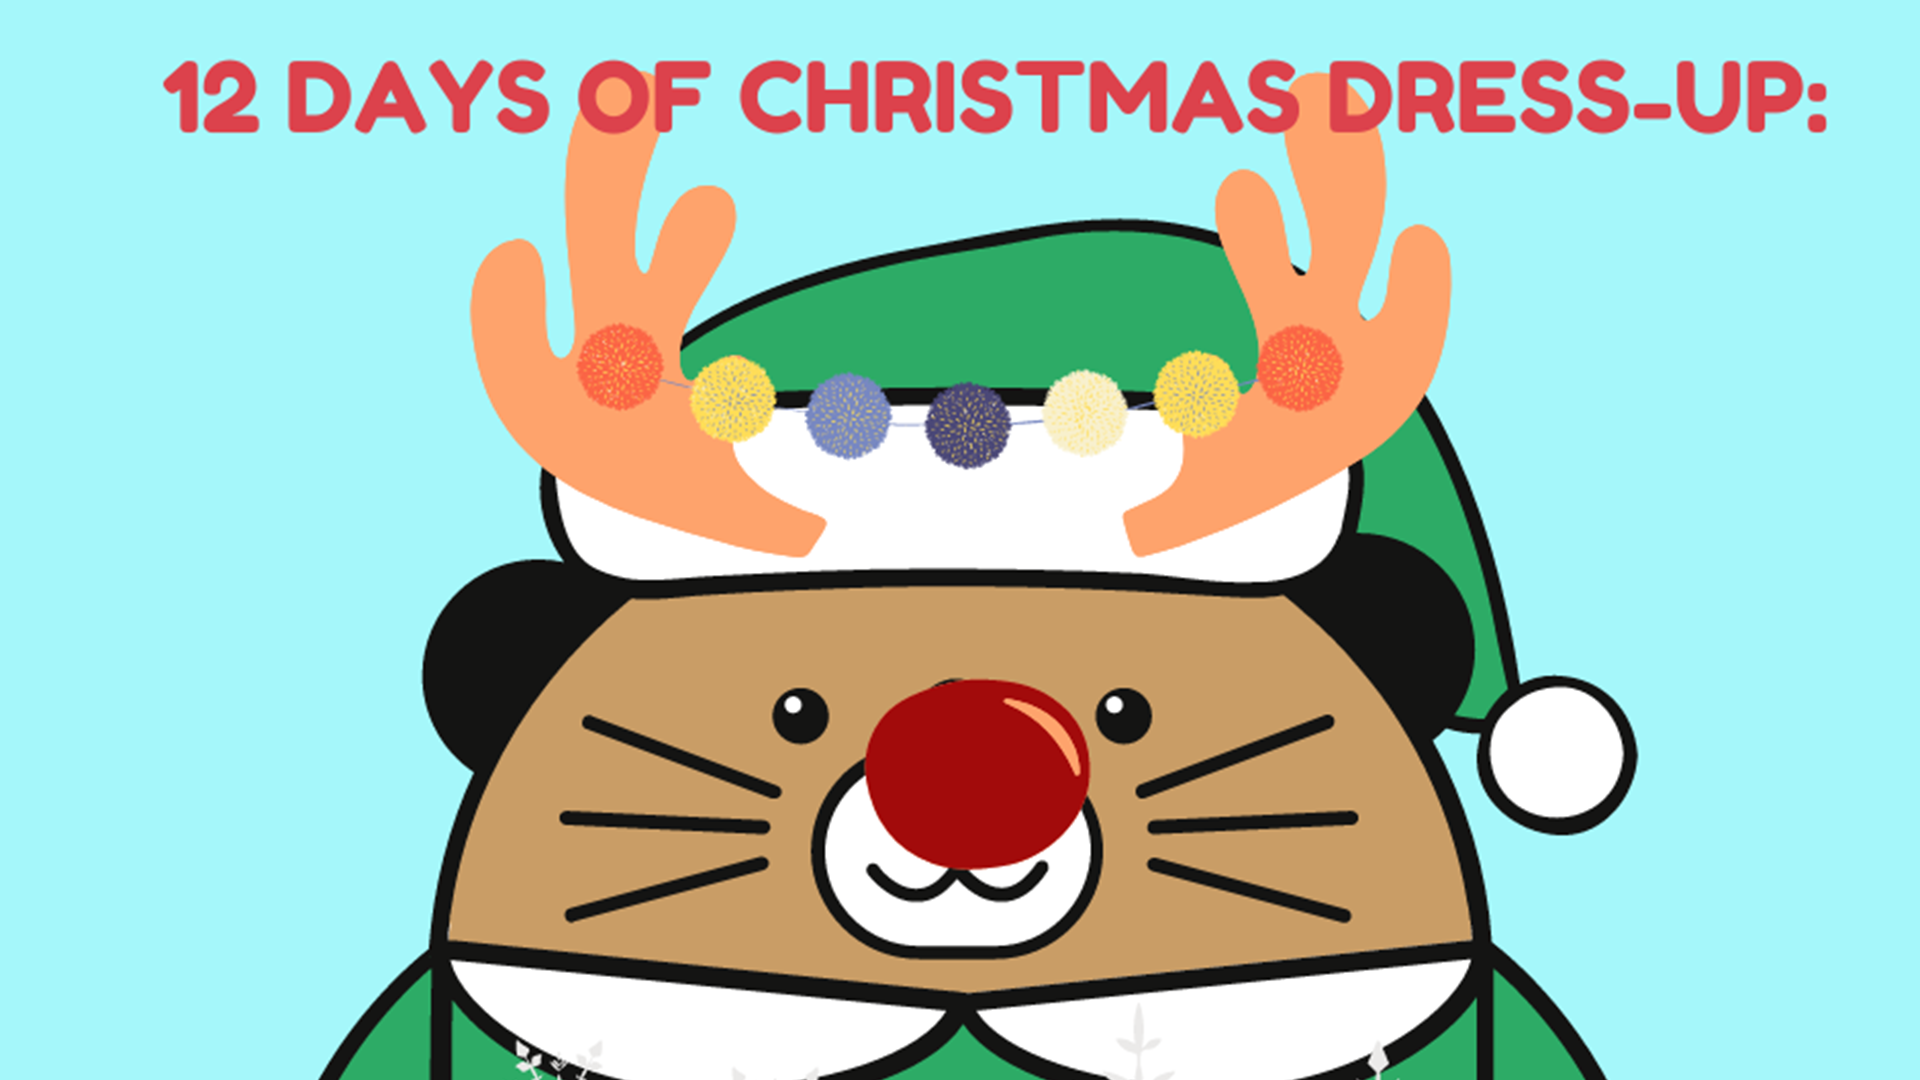 12 Days of Christmas Dress-Up